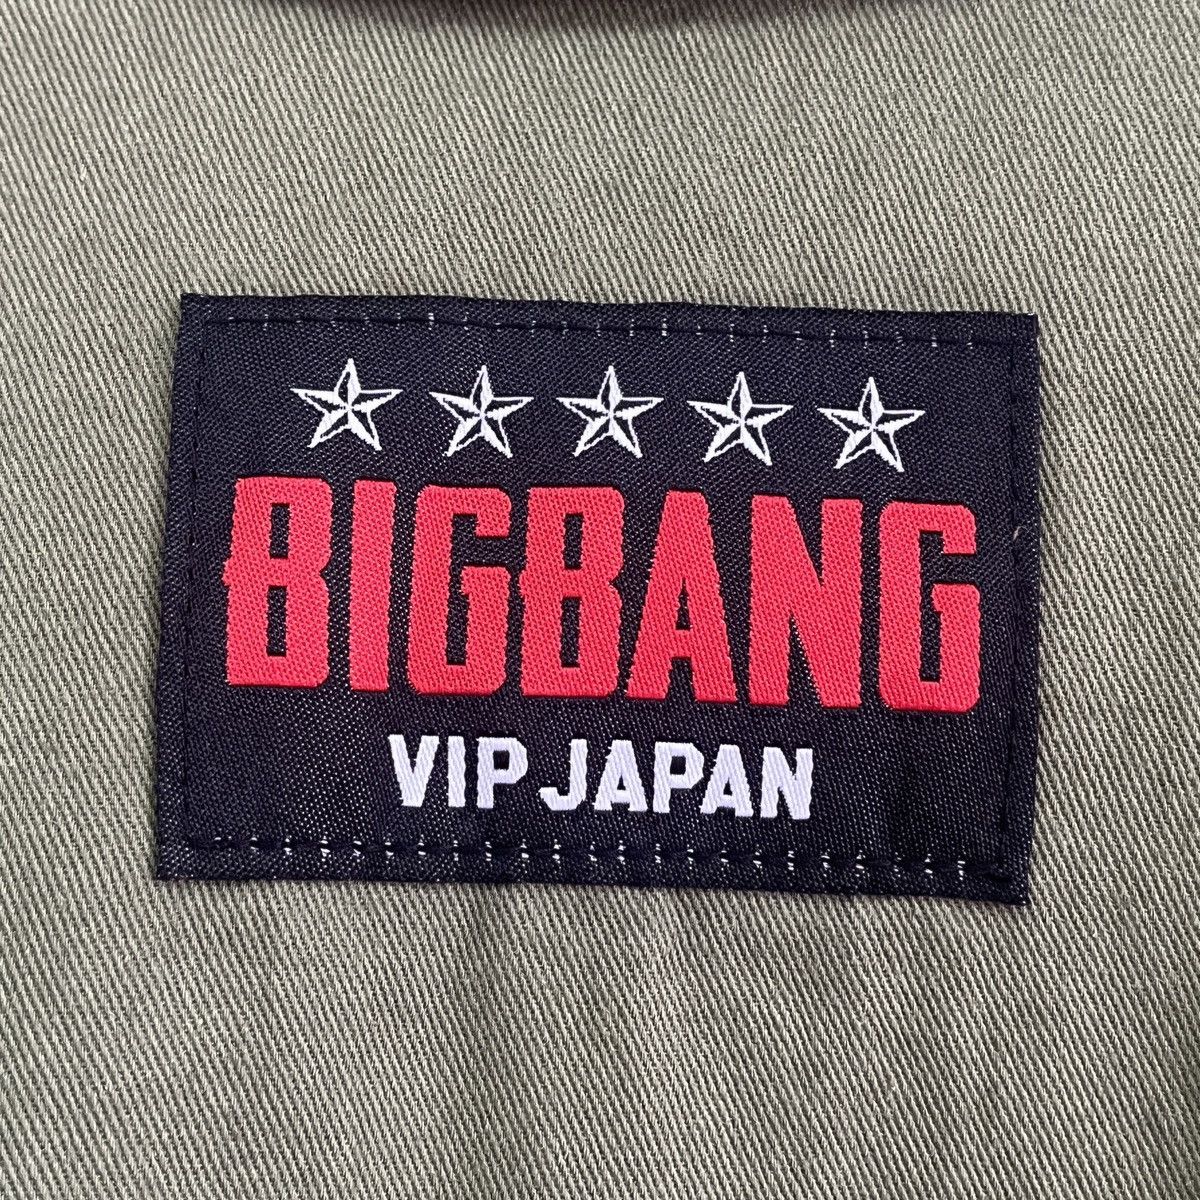 Designer Collection - BigBang VIP Japan Collector Item Long Sleeves Shirts - 5